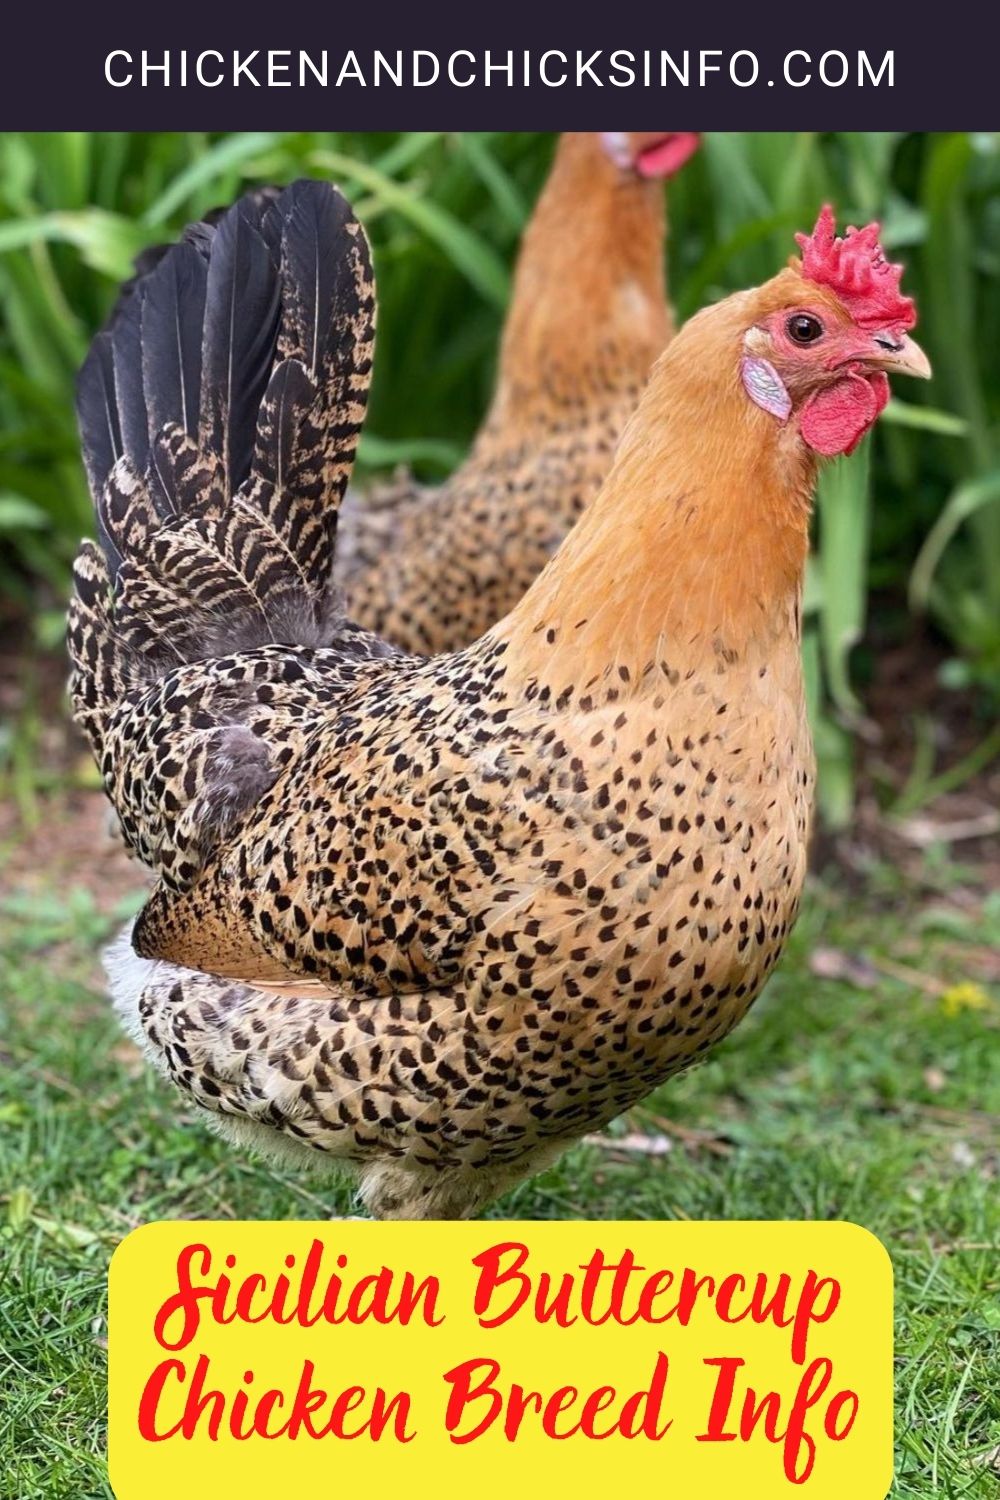 Sicilian Buttercup Chicken Breed Info pinterest image.